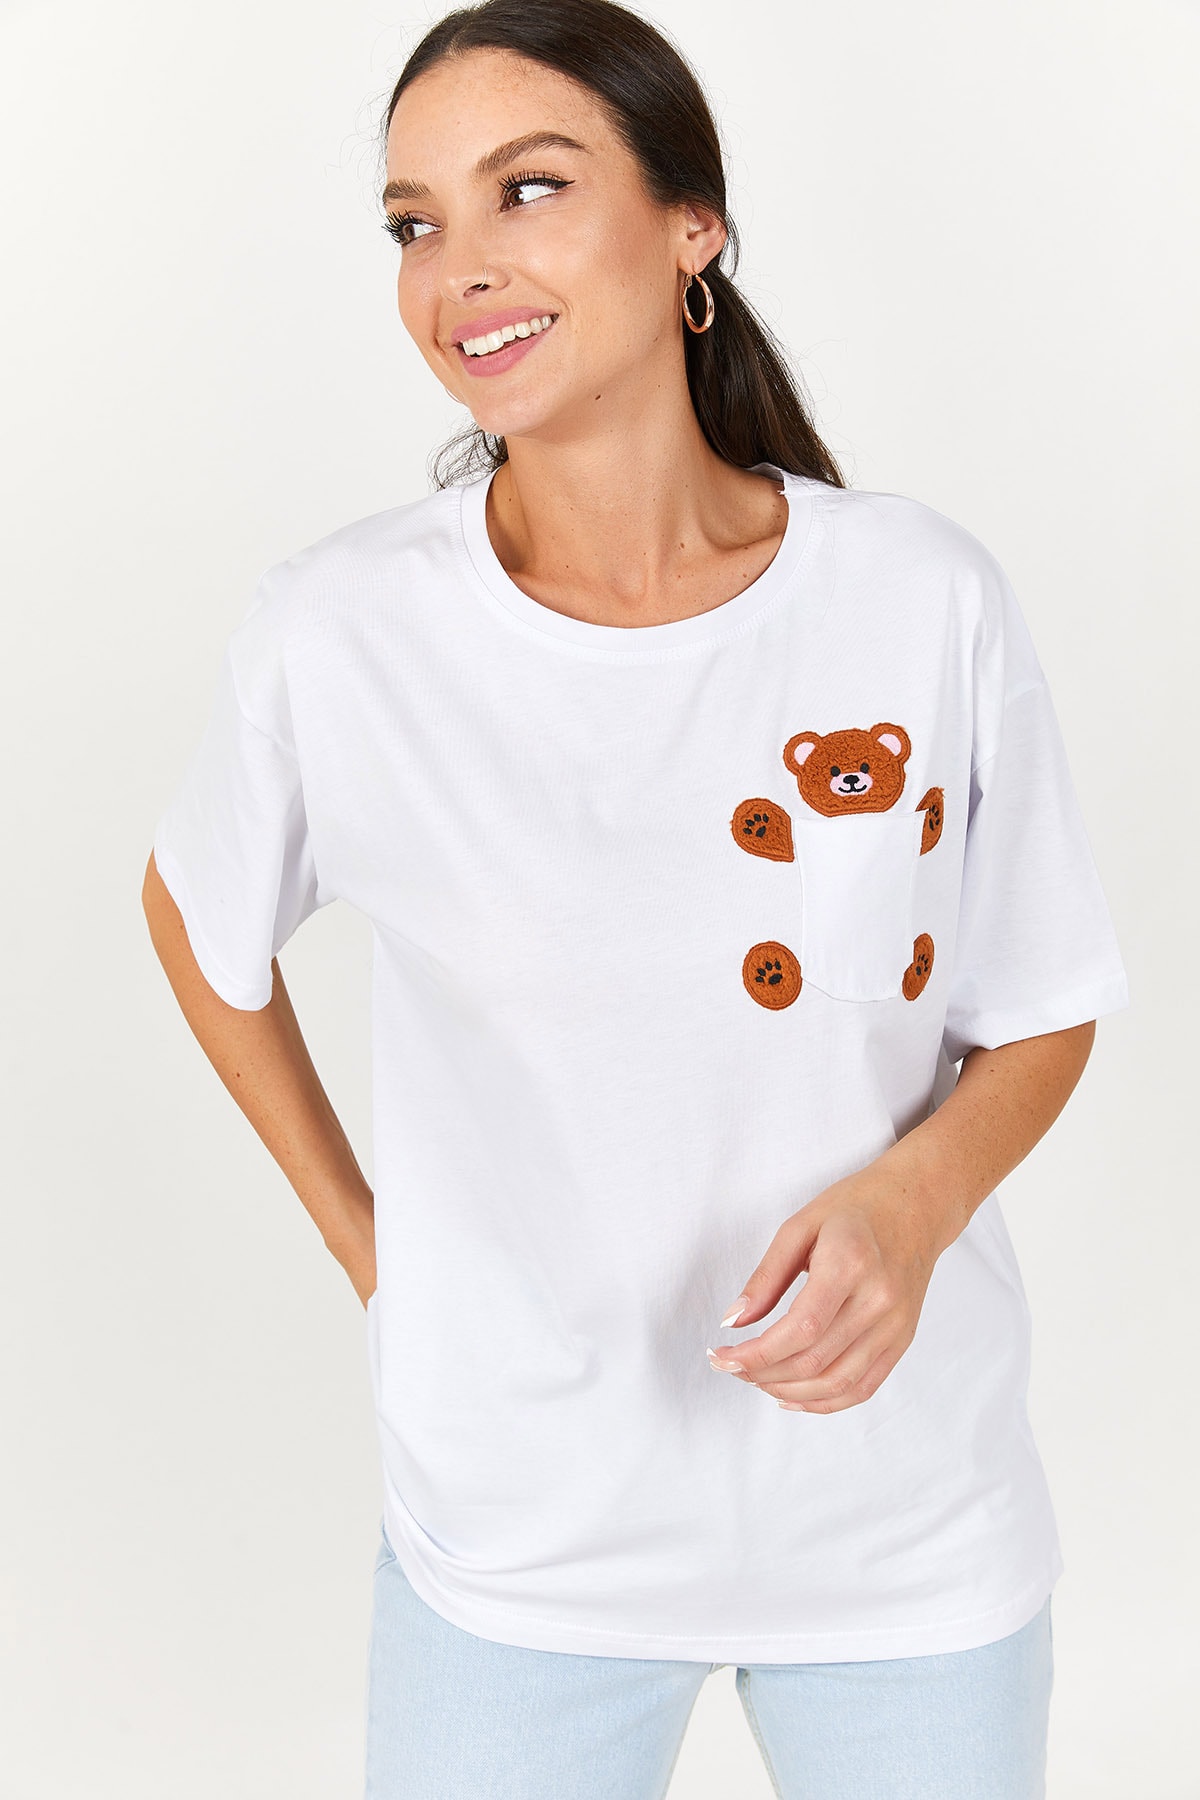 armonika Women's White Oversized T-shirt with Pocket and Teddy bears